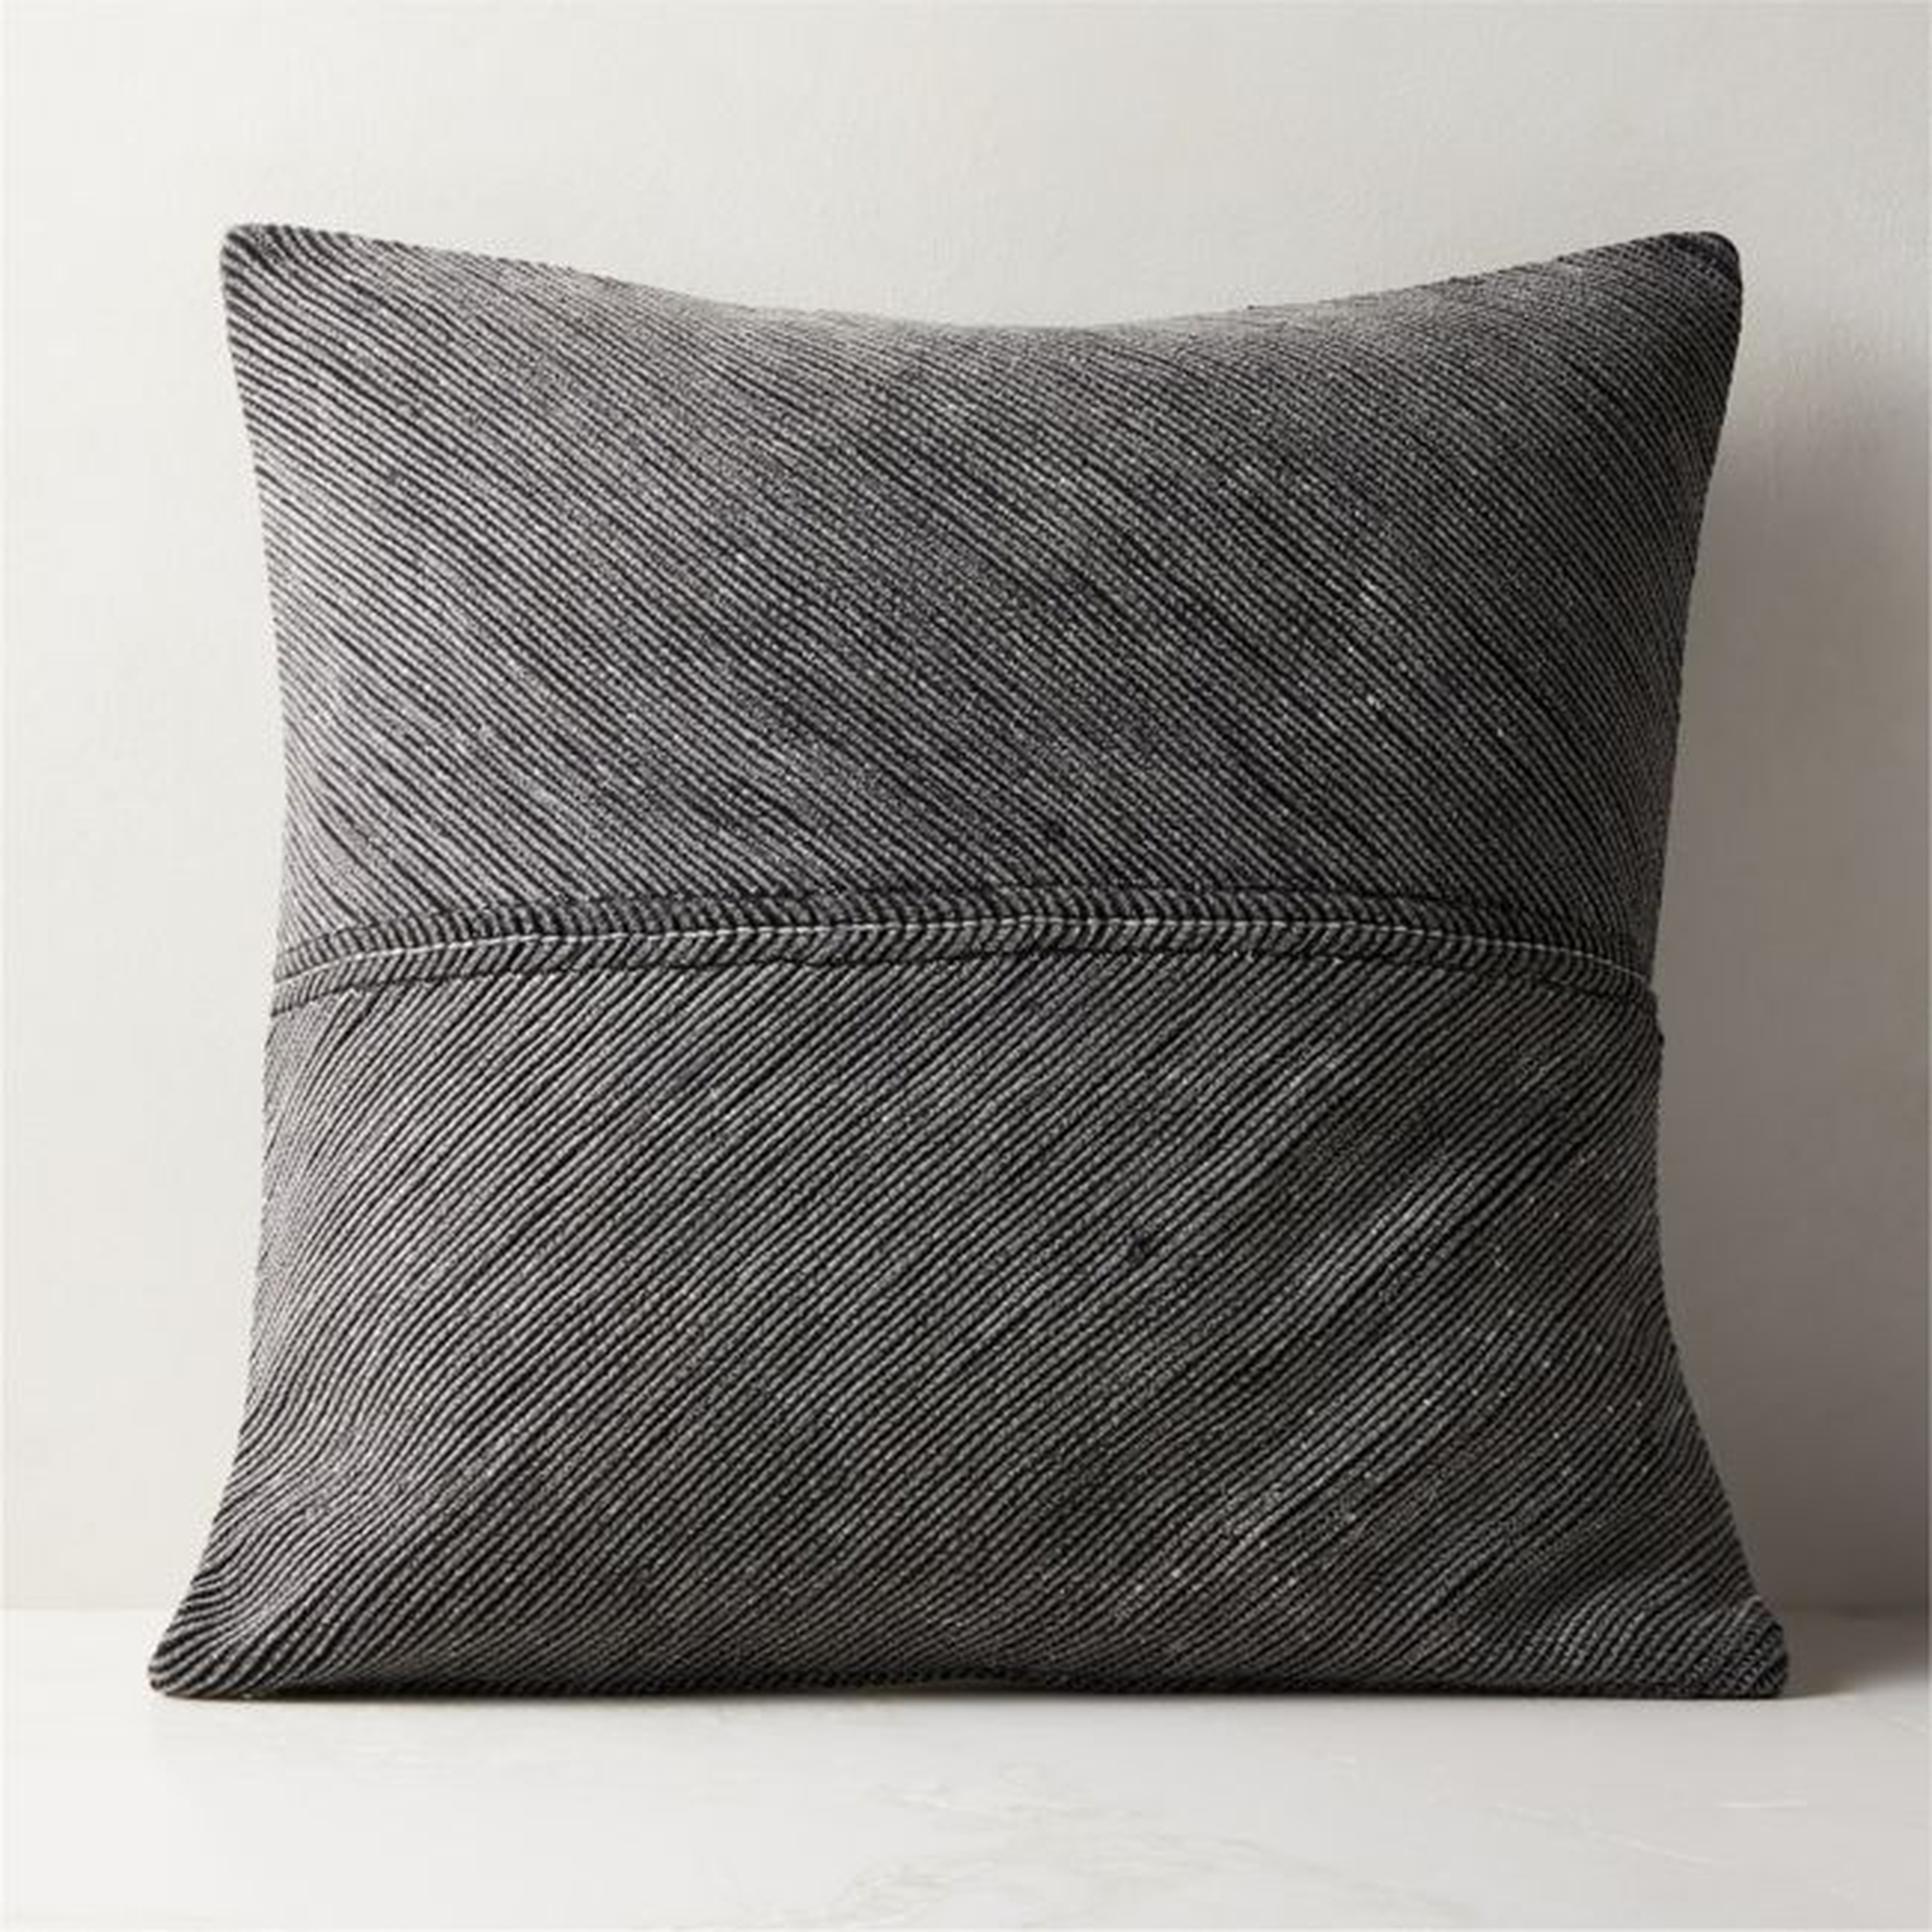 23" Convey Black Pillow With Down-Alternative Insert - CB2